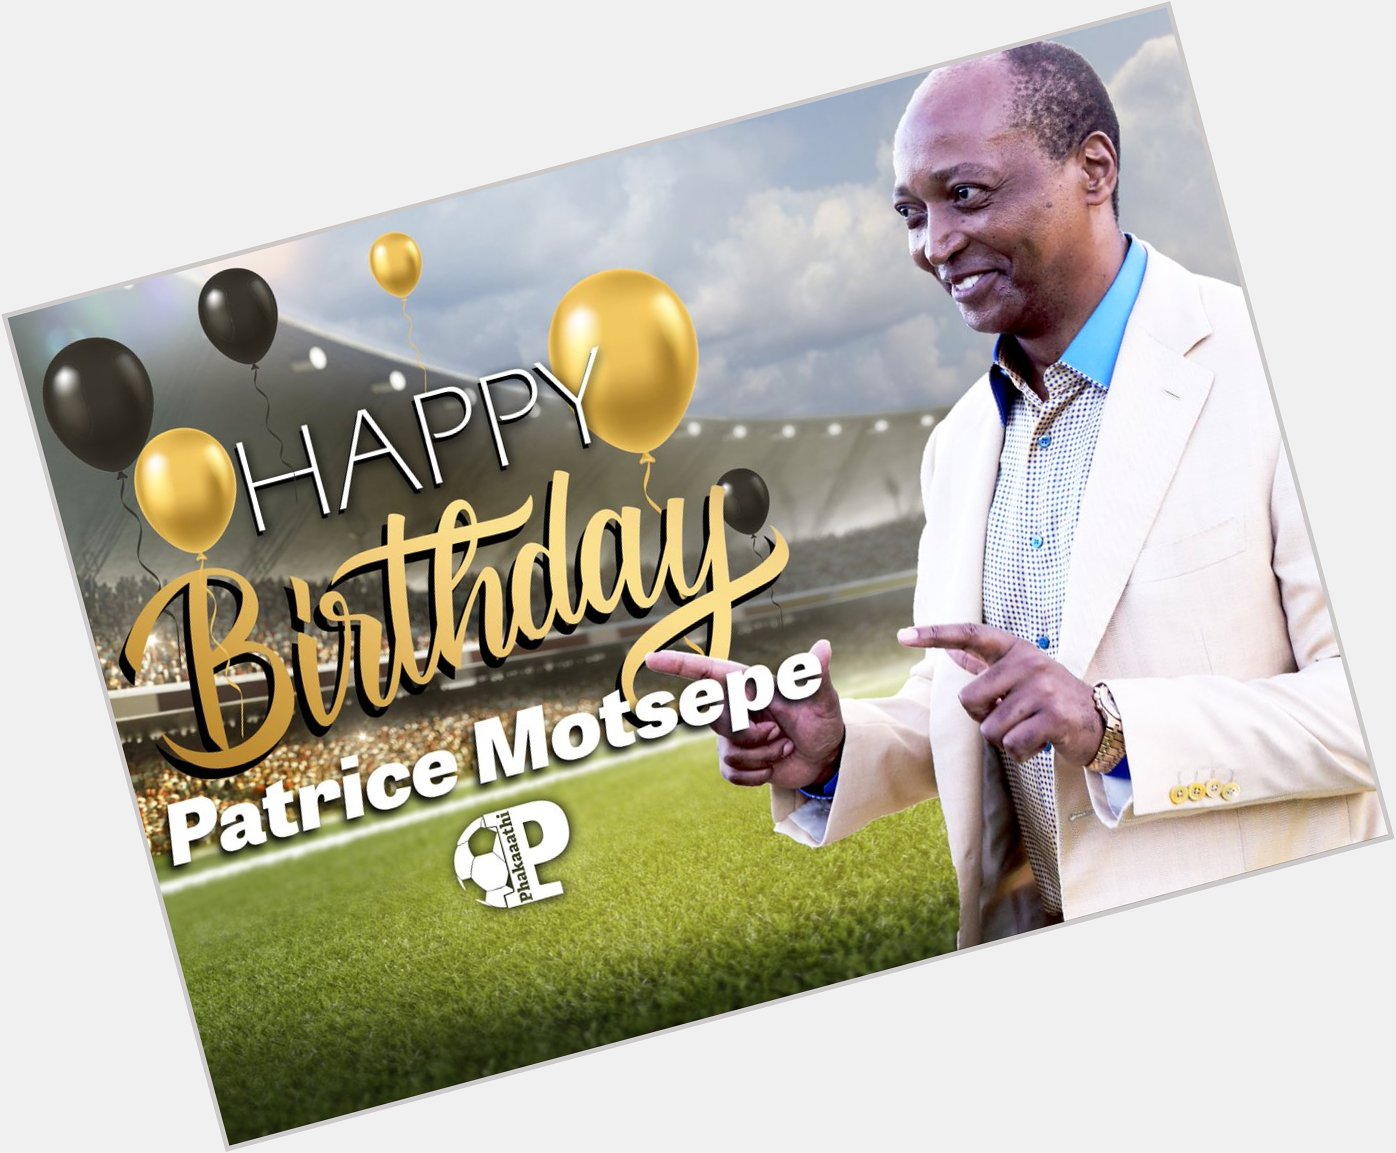 Family, please join us in wishing Mamelodi Sundowns president Patrice Motsepe a Happy Birthday! 